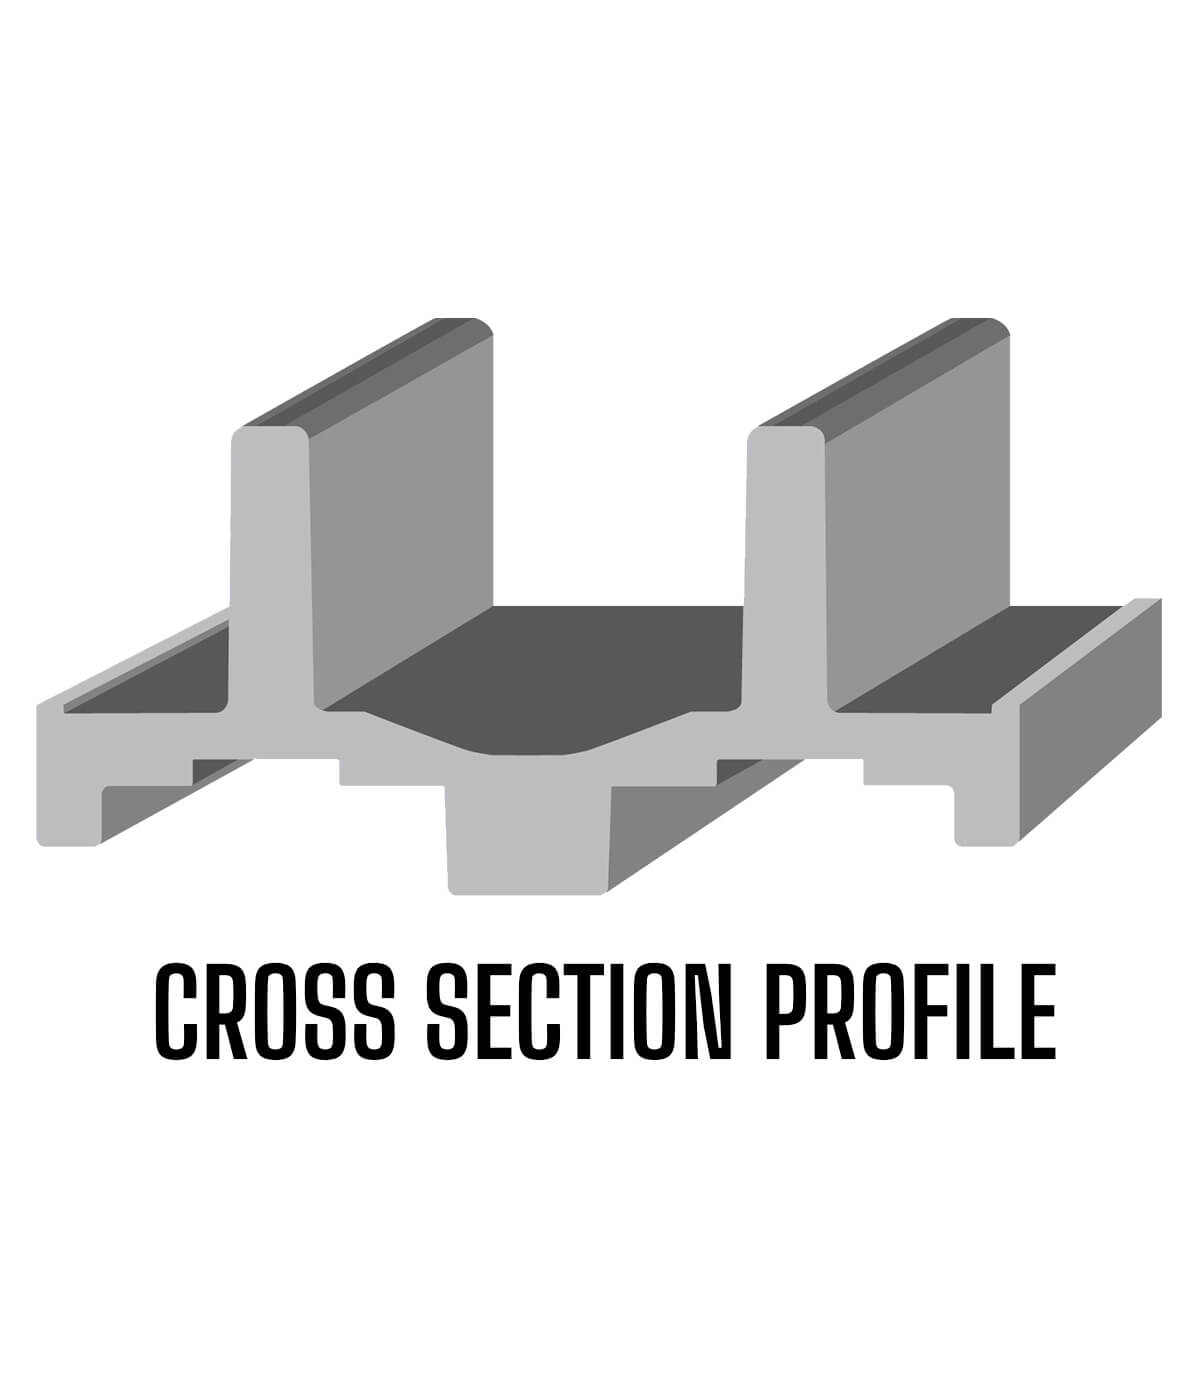 C&A Pro Skis XCS crossover ski cross section